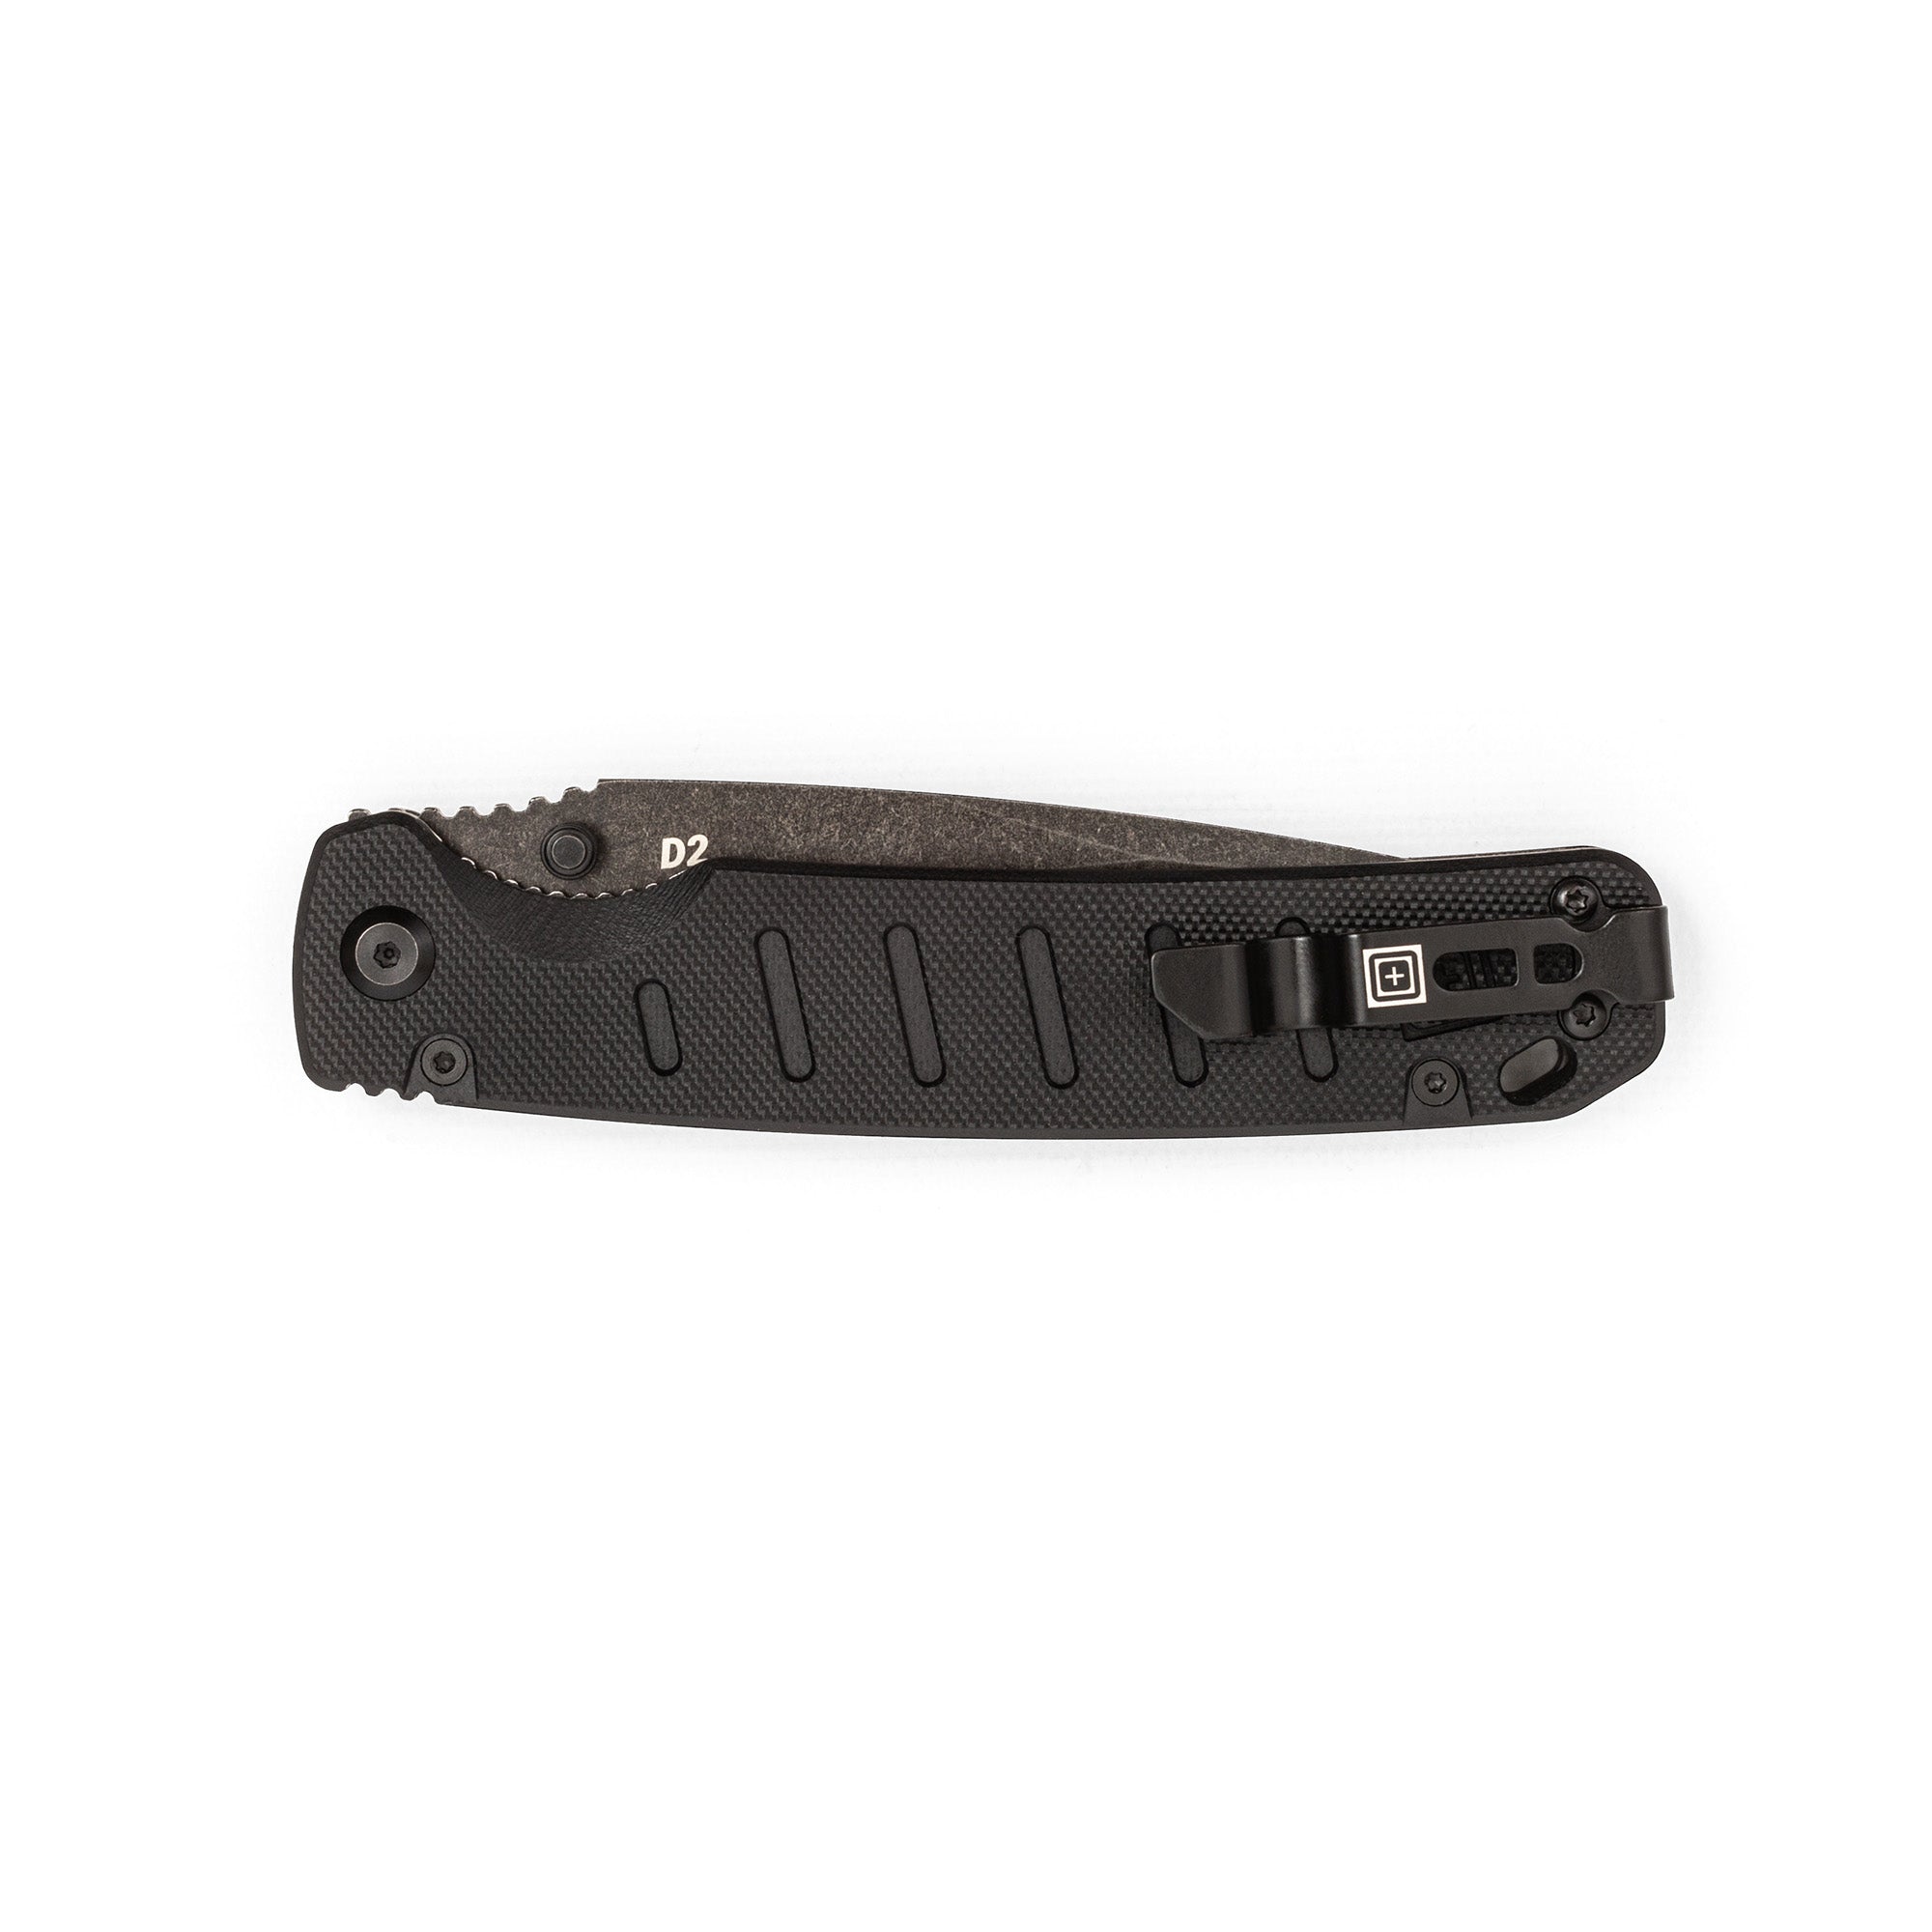 5.11 Tactical Braddock DP Full Knife Tactical Gear Australia Supplier Distributor Dealer